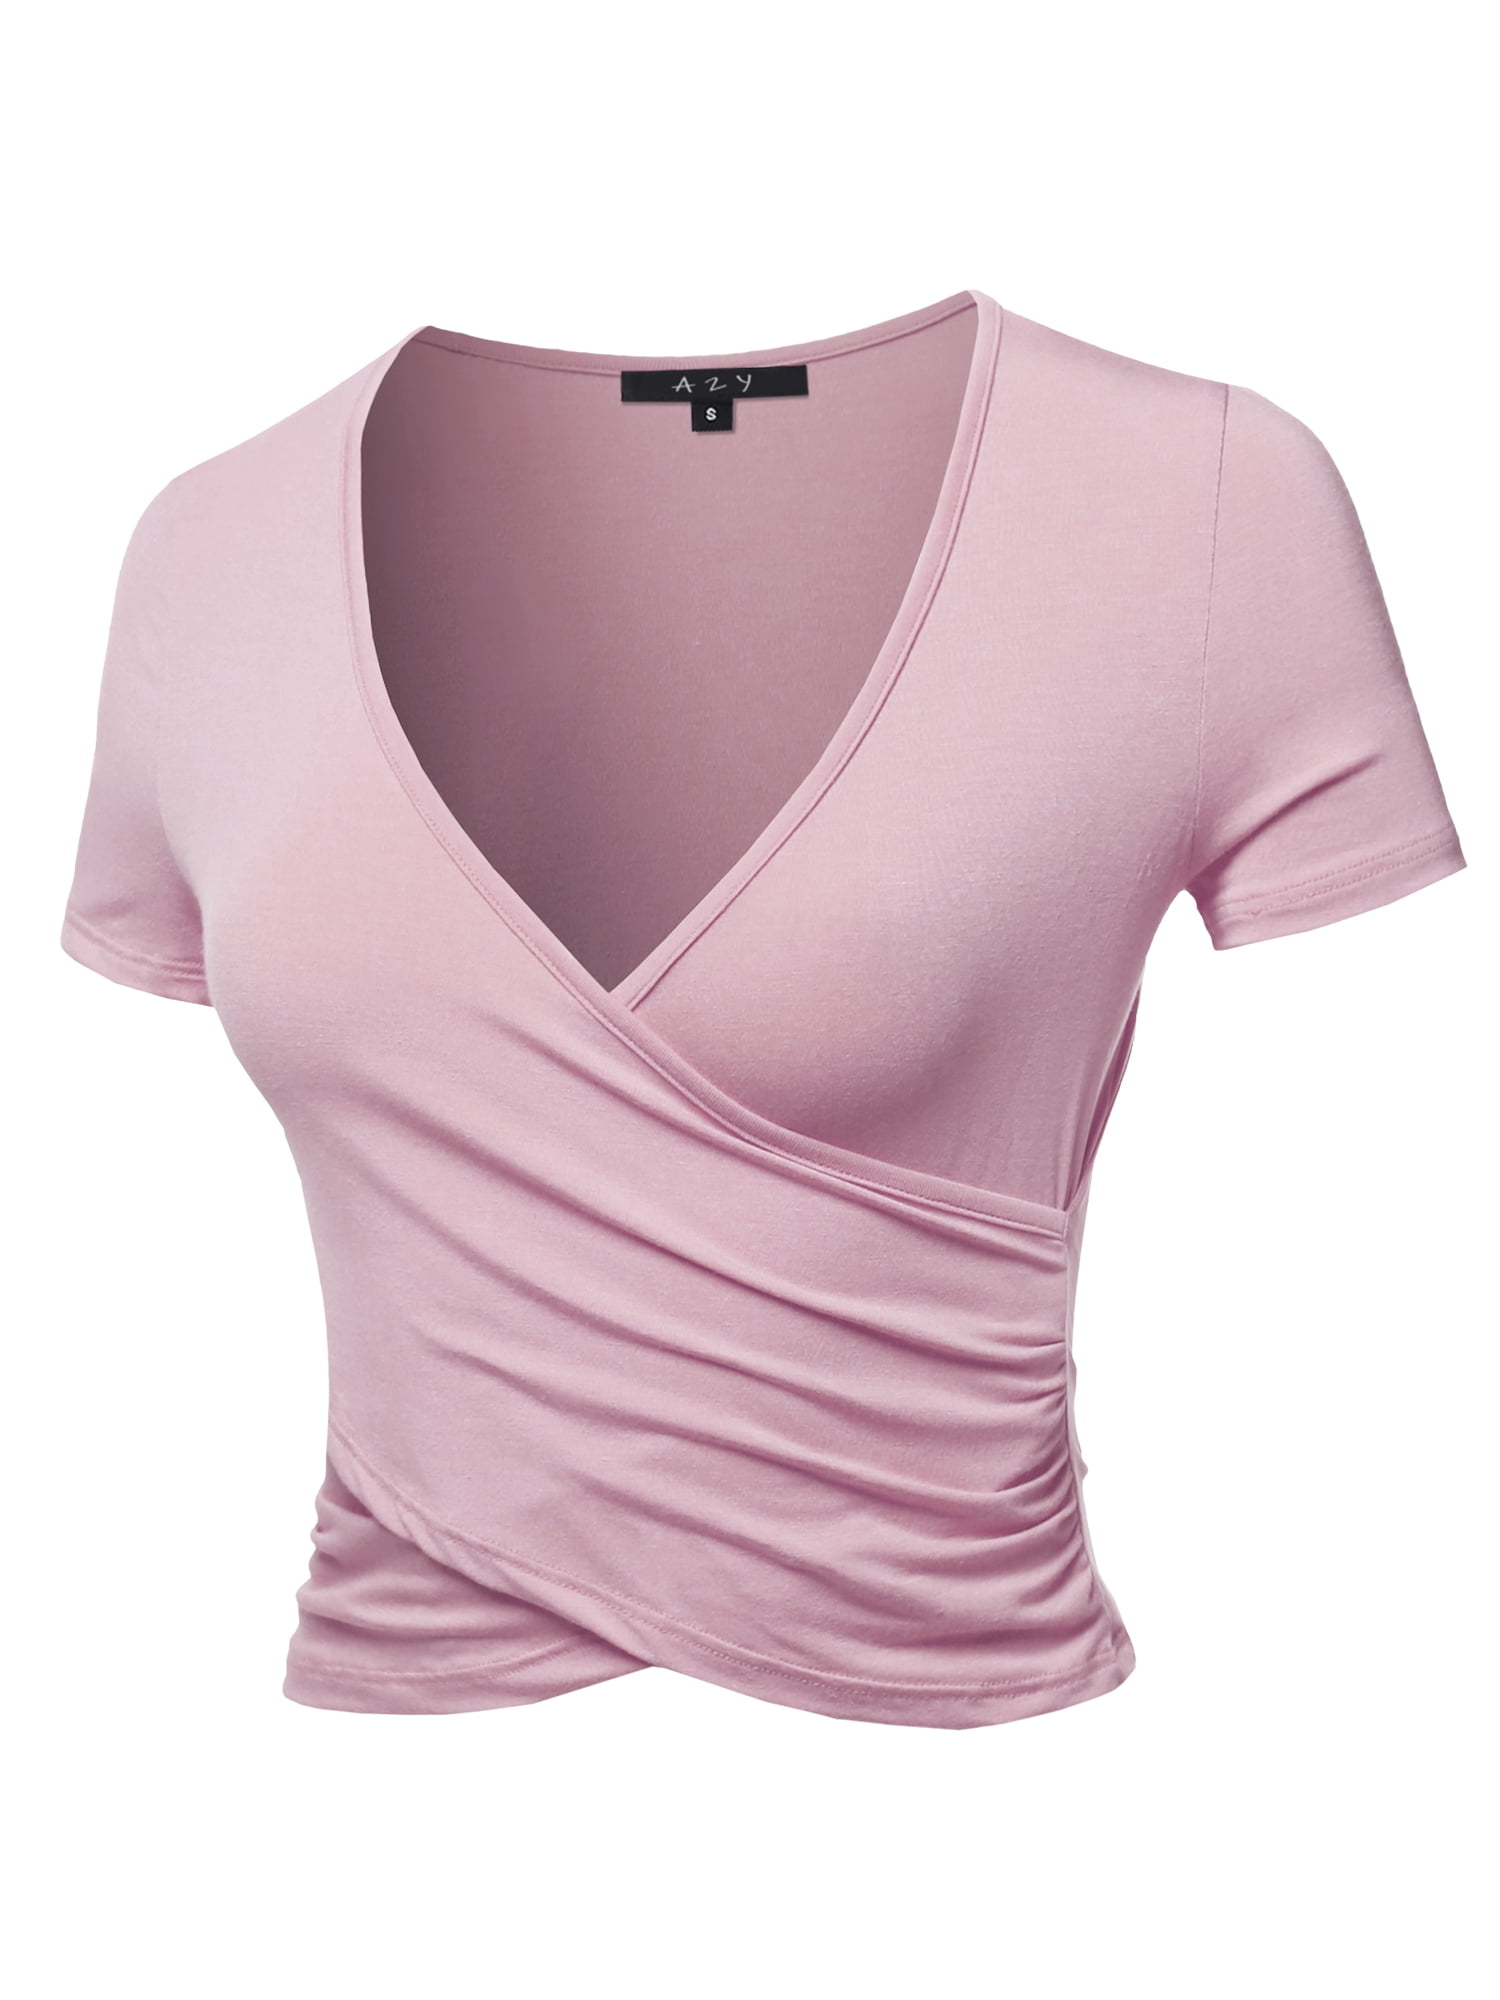 A2y Womens Deep V Neck Short Sleeve Unique Slim Fit Cross Wrap Shirt Crop Tops Dusty Pink M 